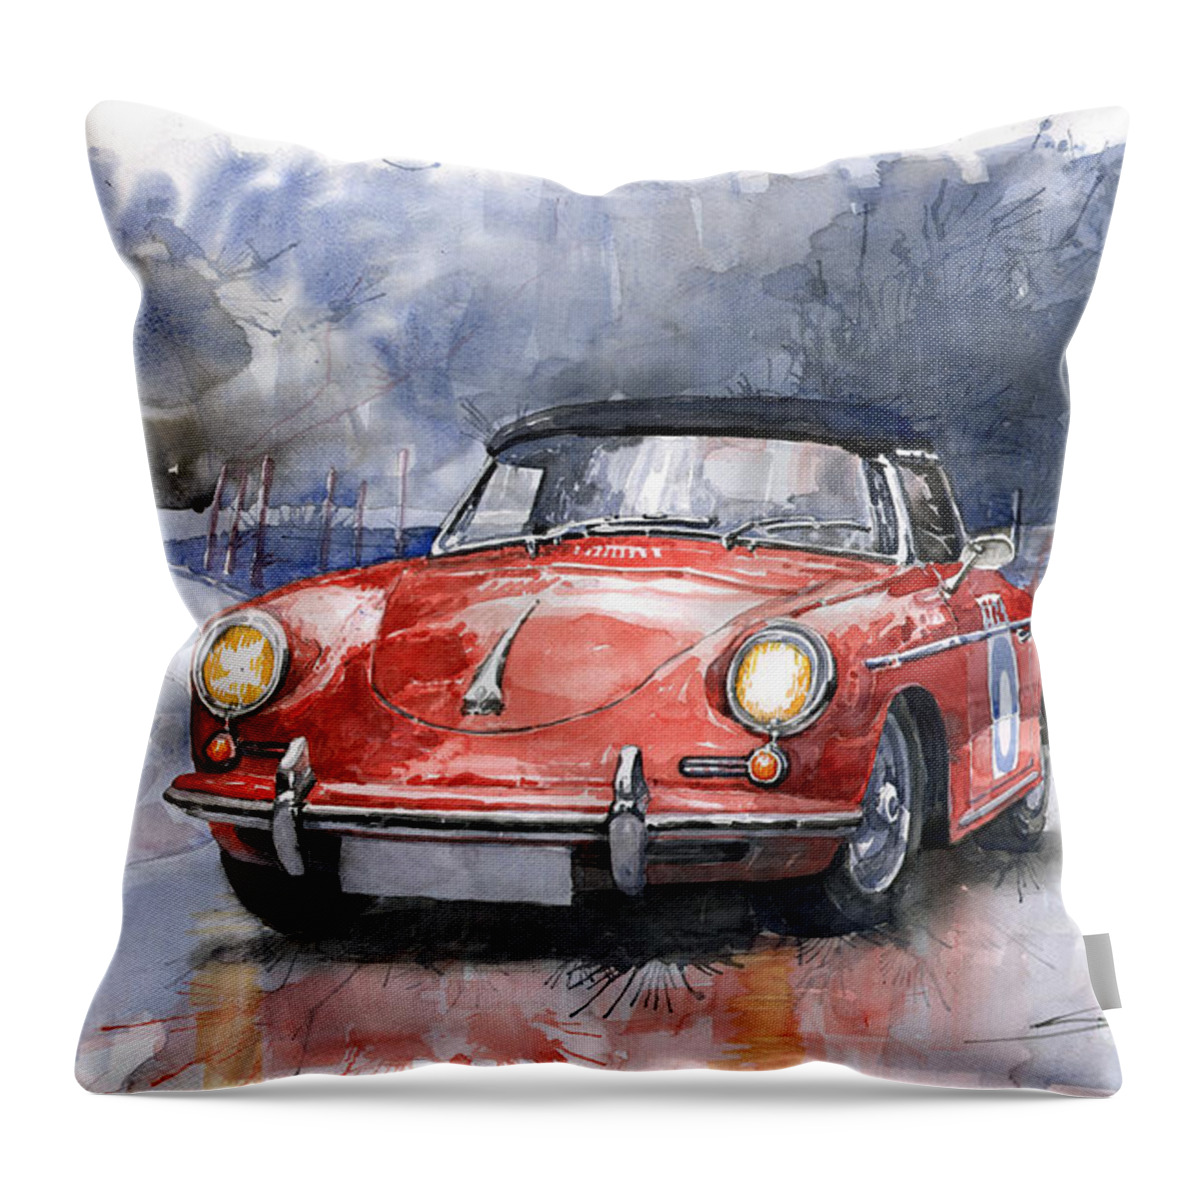 Shevchukart Throw Pillow featuring the painting Porsche 356 B Roadster by Yuriy Shevchuk